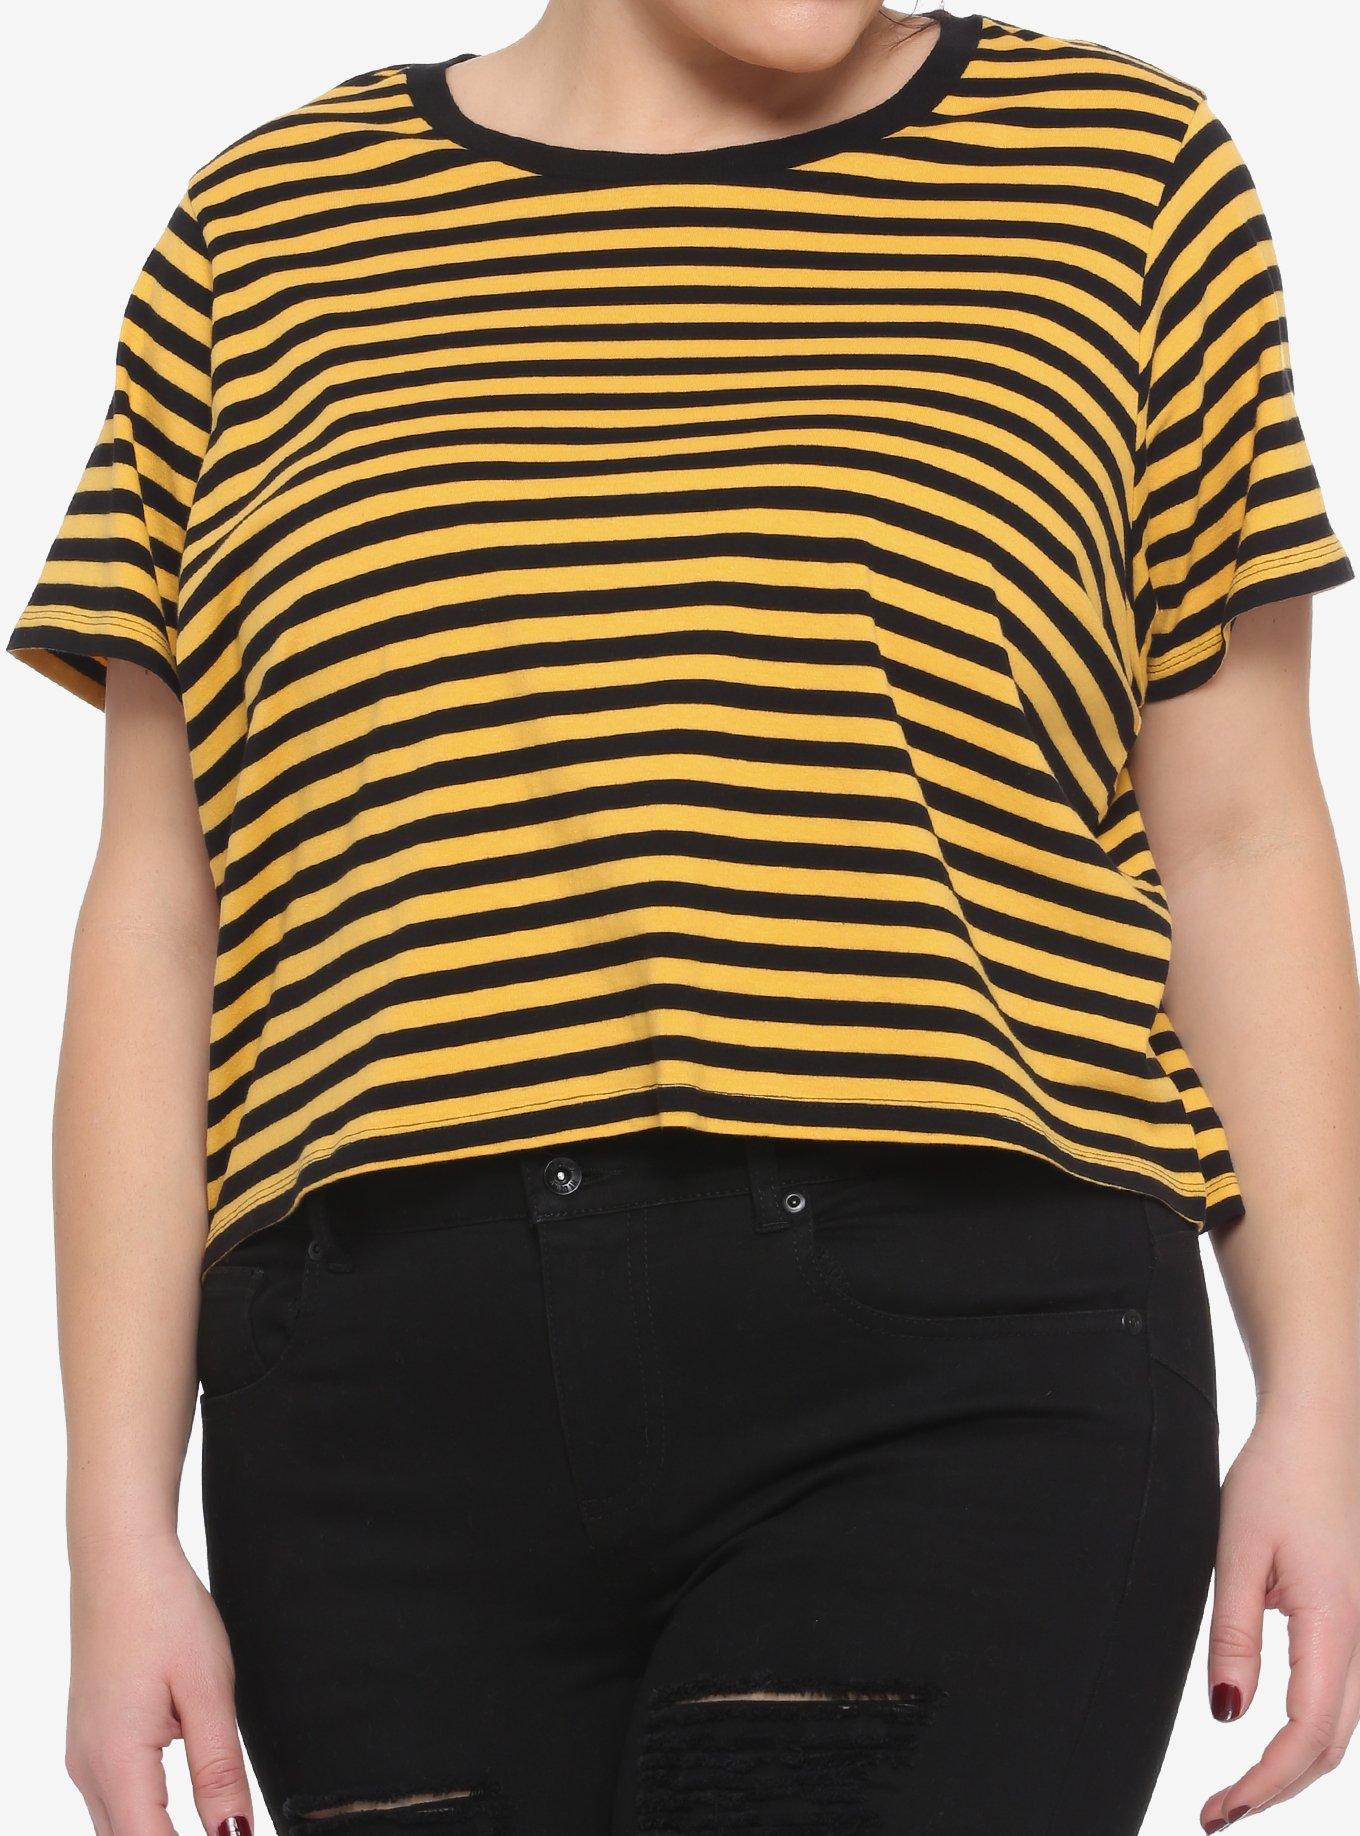 Black & Yellow Stripe Girls Crop T-Shirt Plus Size, STRIPES, hi-res